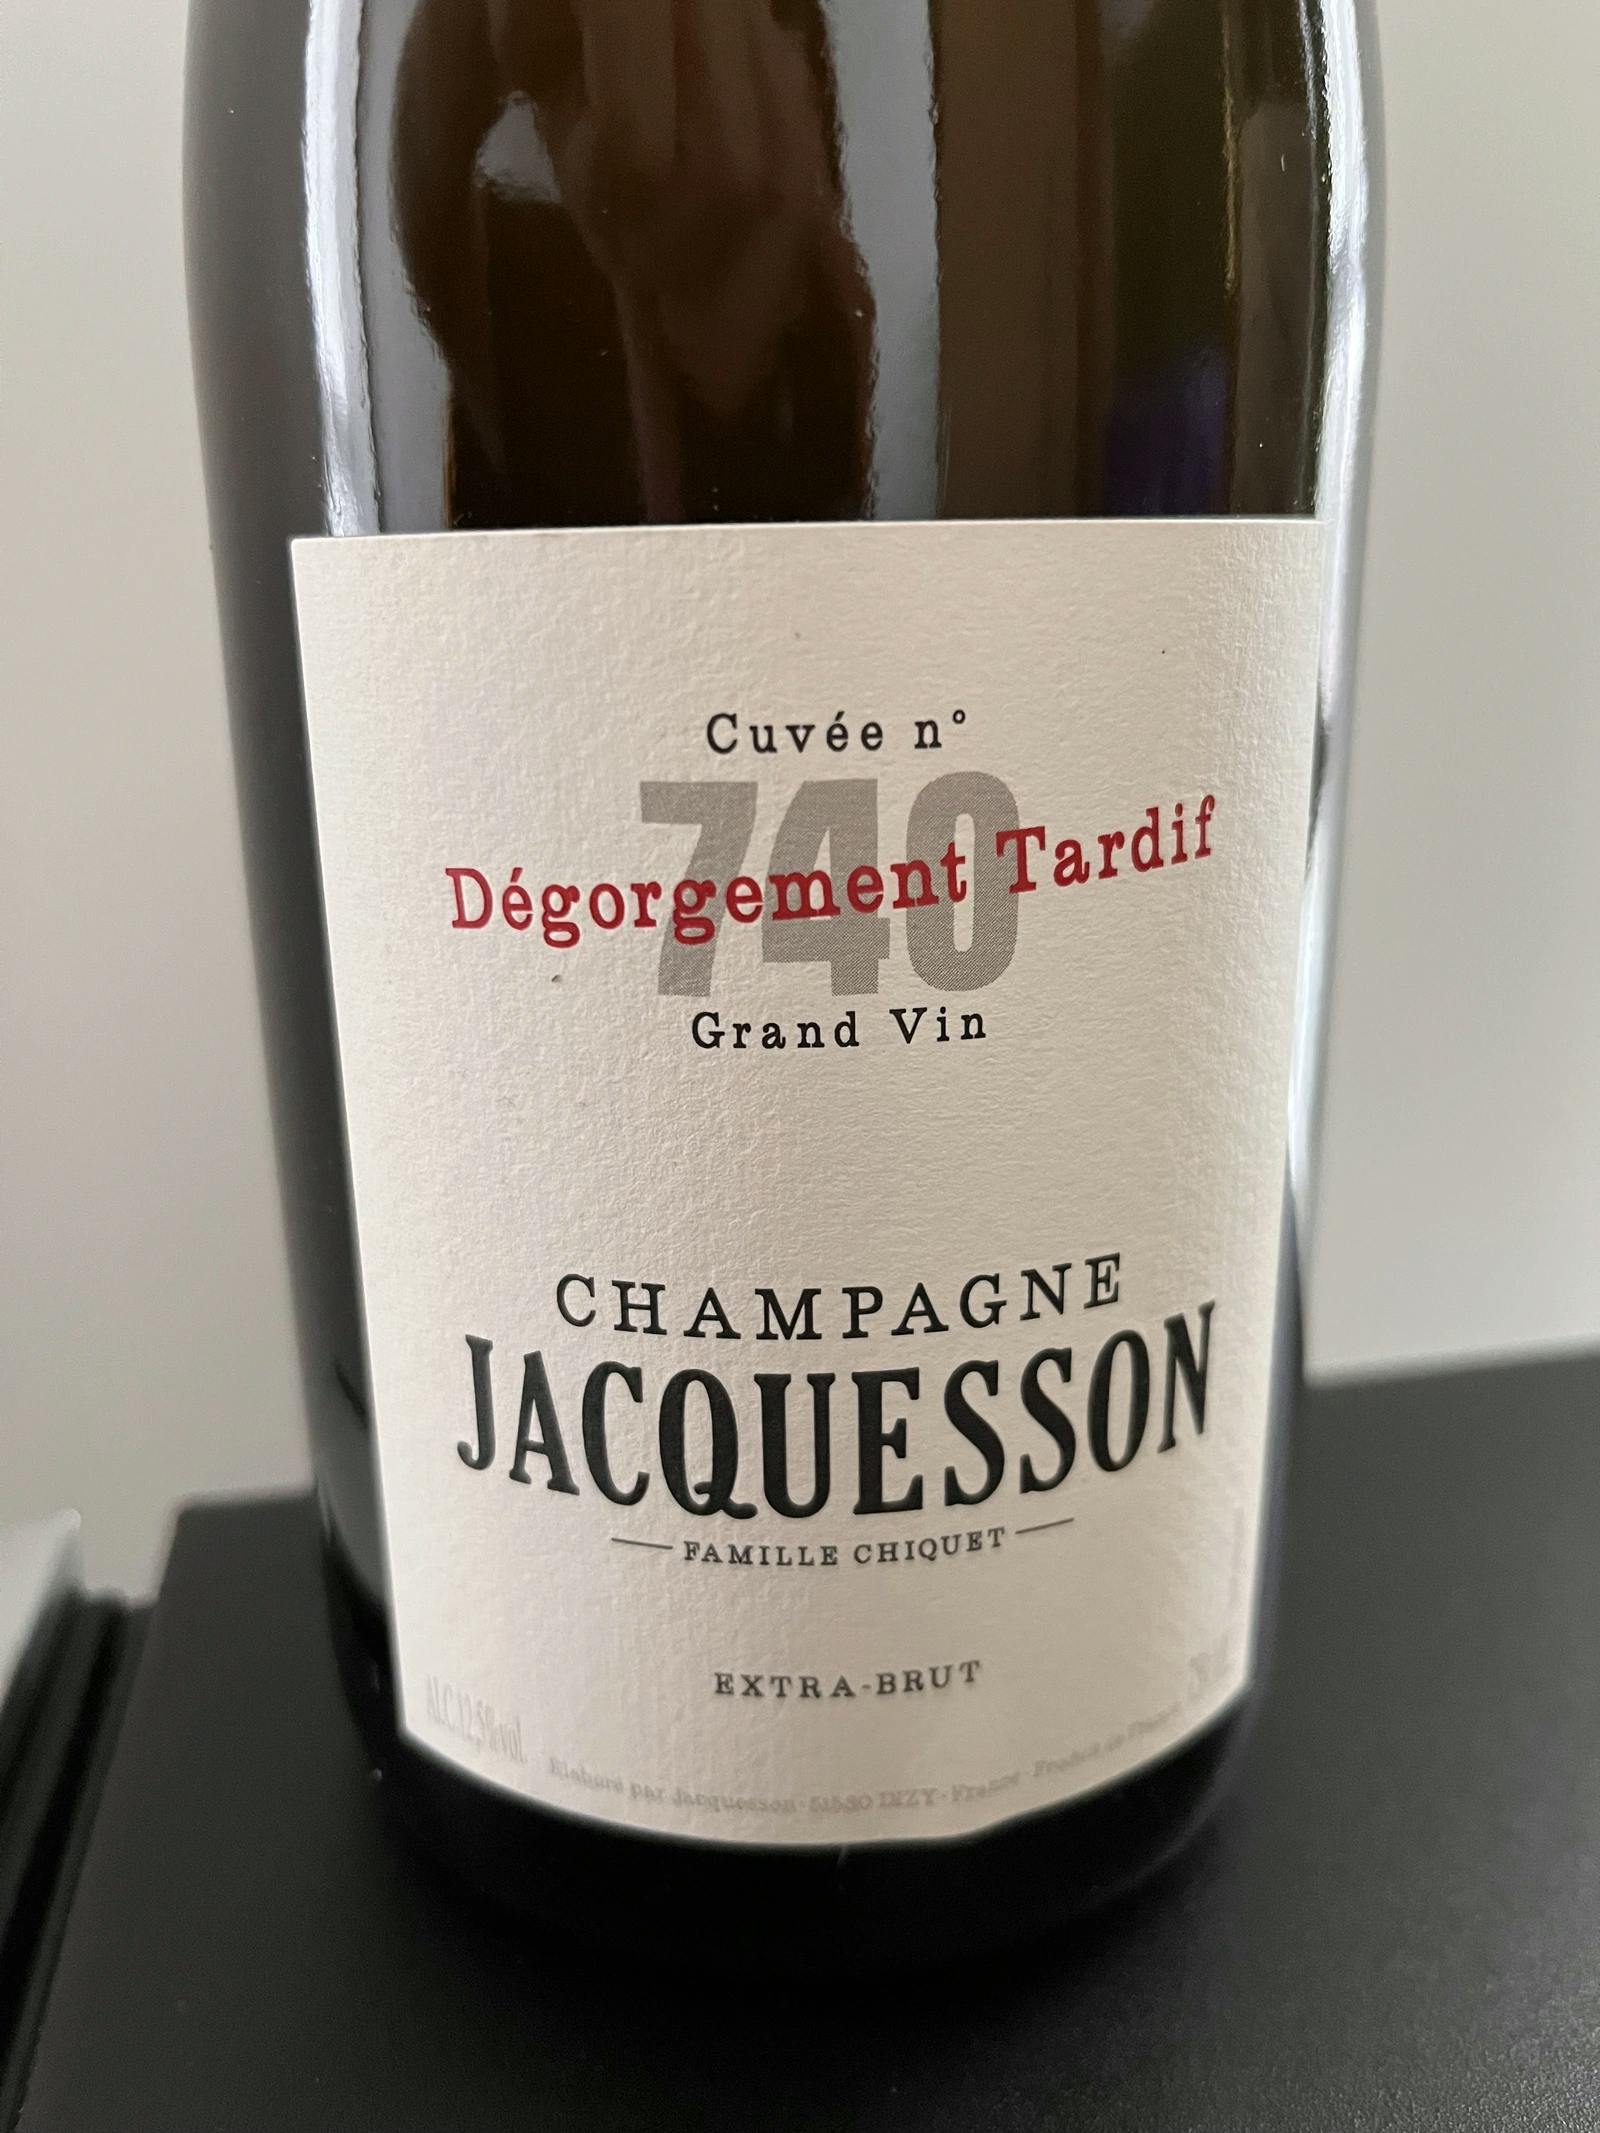 Jacquesson Cuvée 740 DT Grand Vin (2012) NV